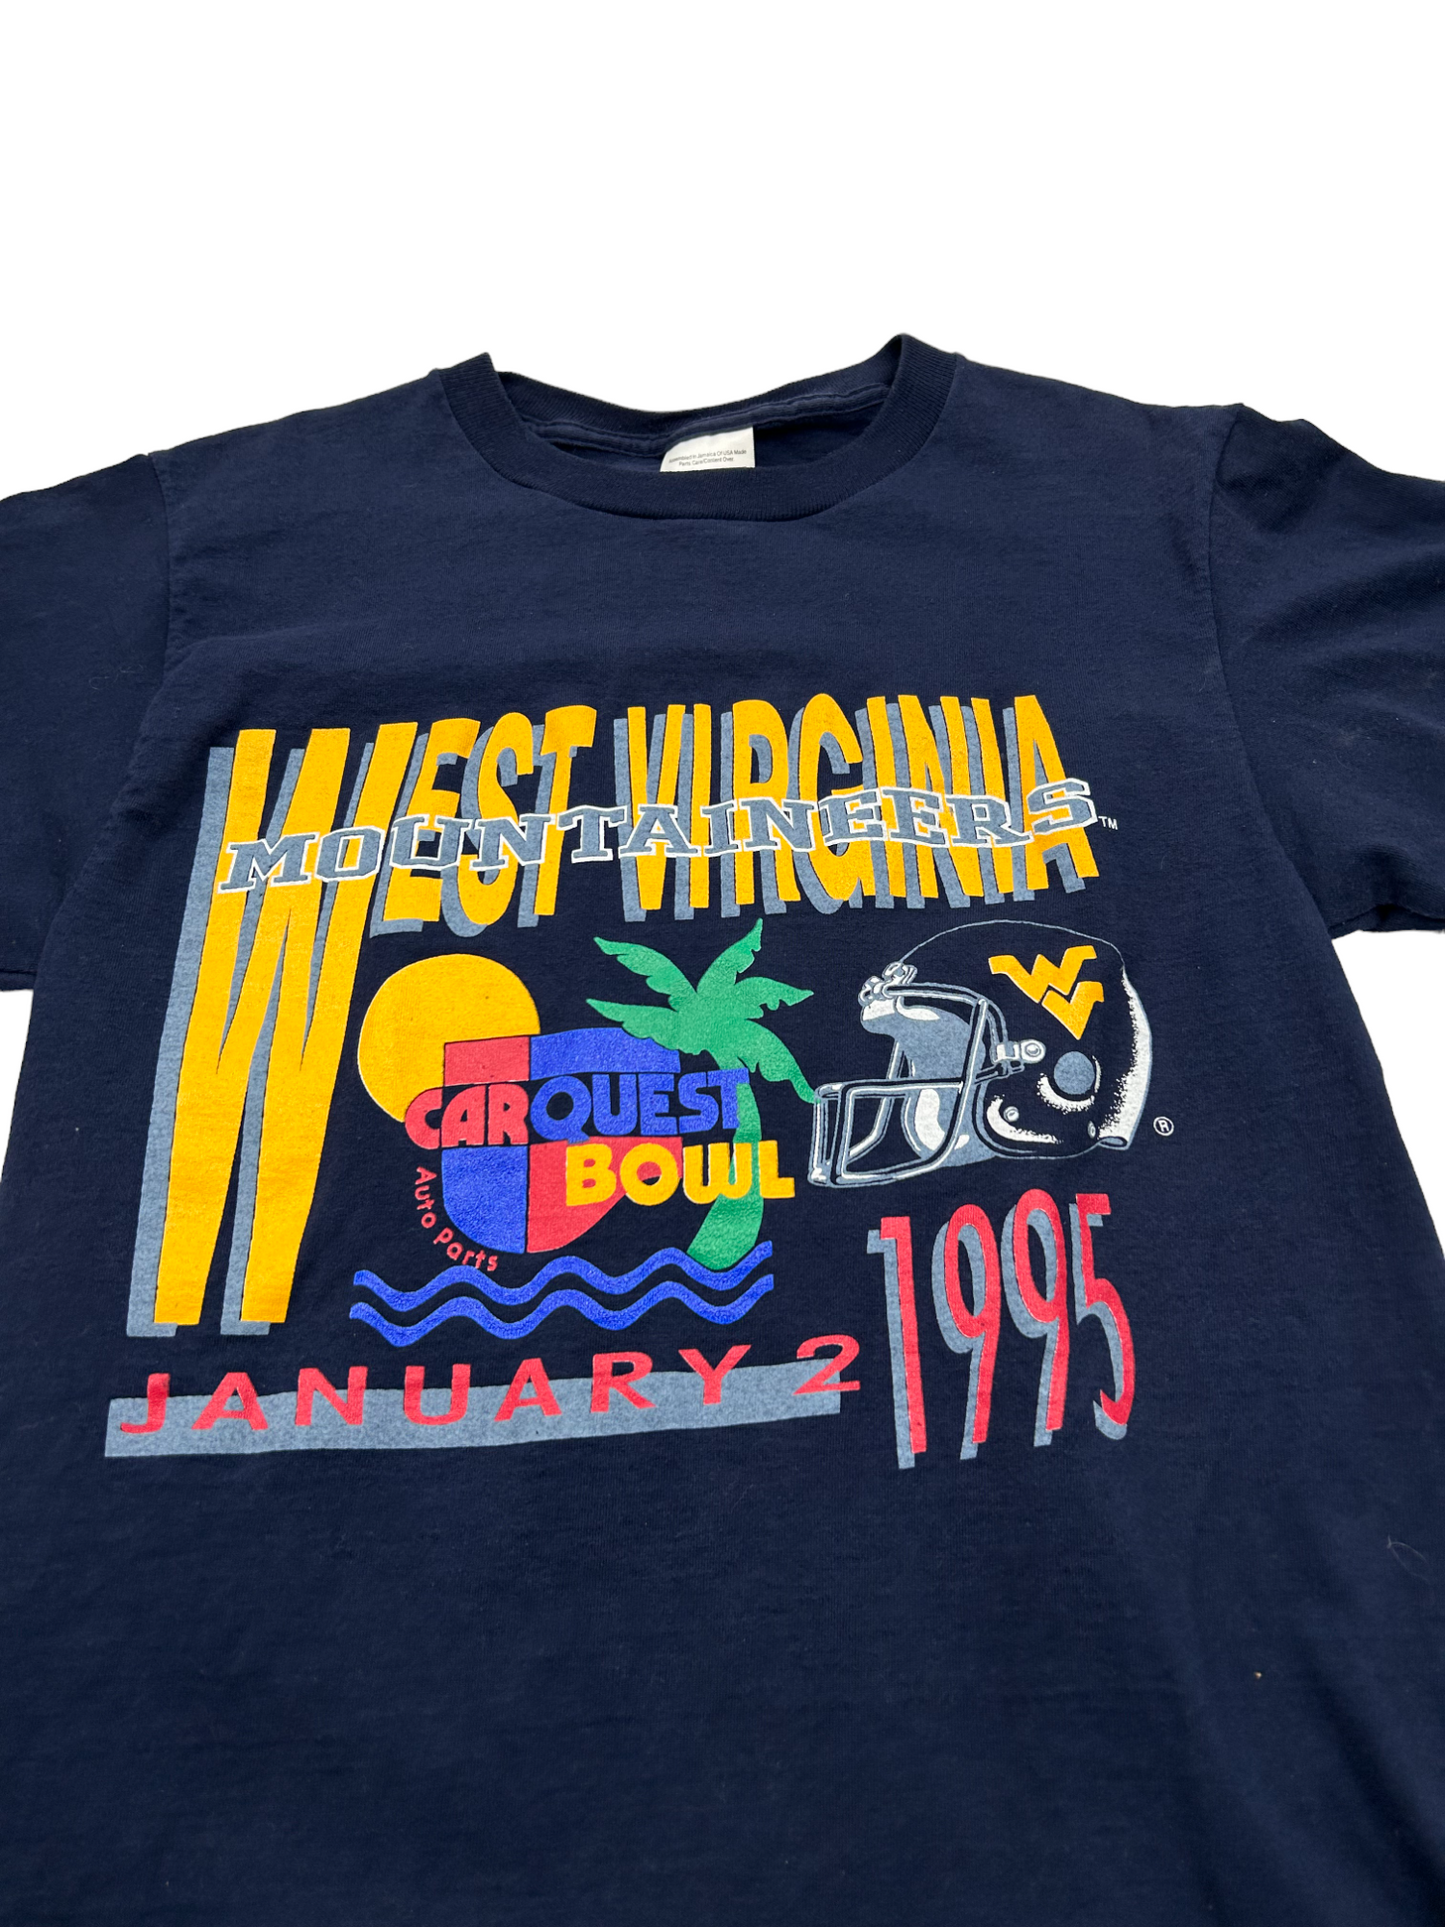 West Virginia Mountaineers 1995 T-Shirt